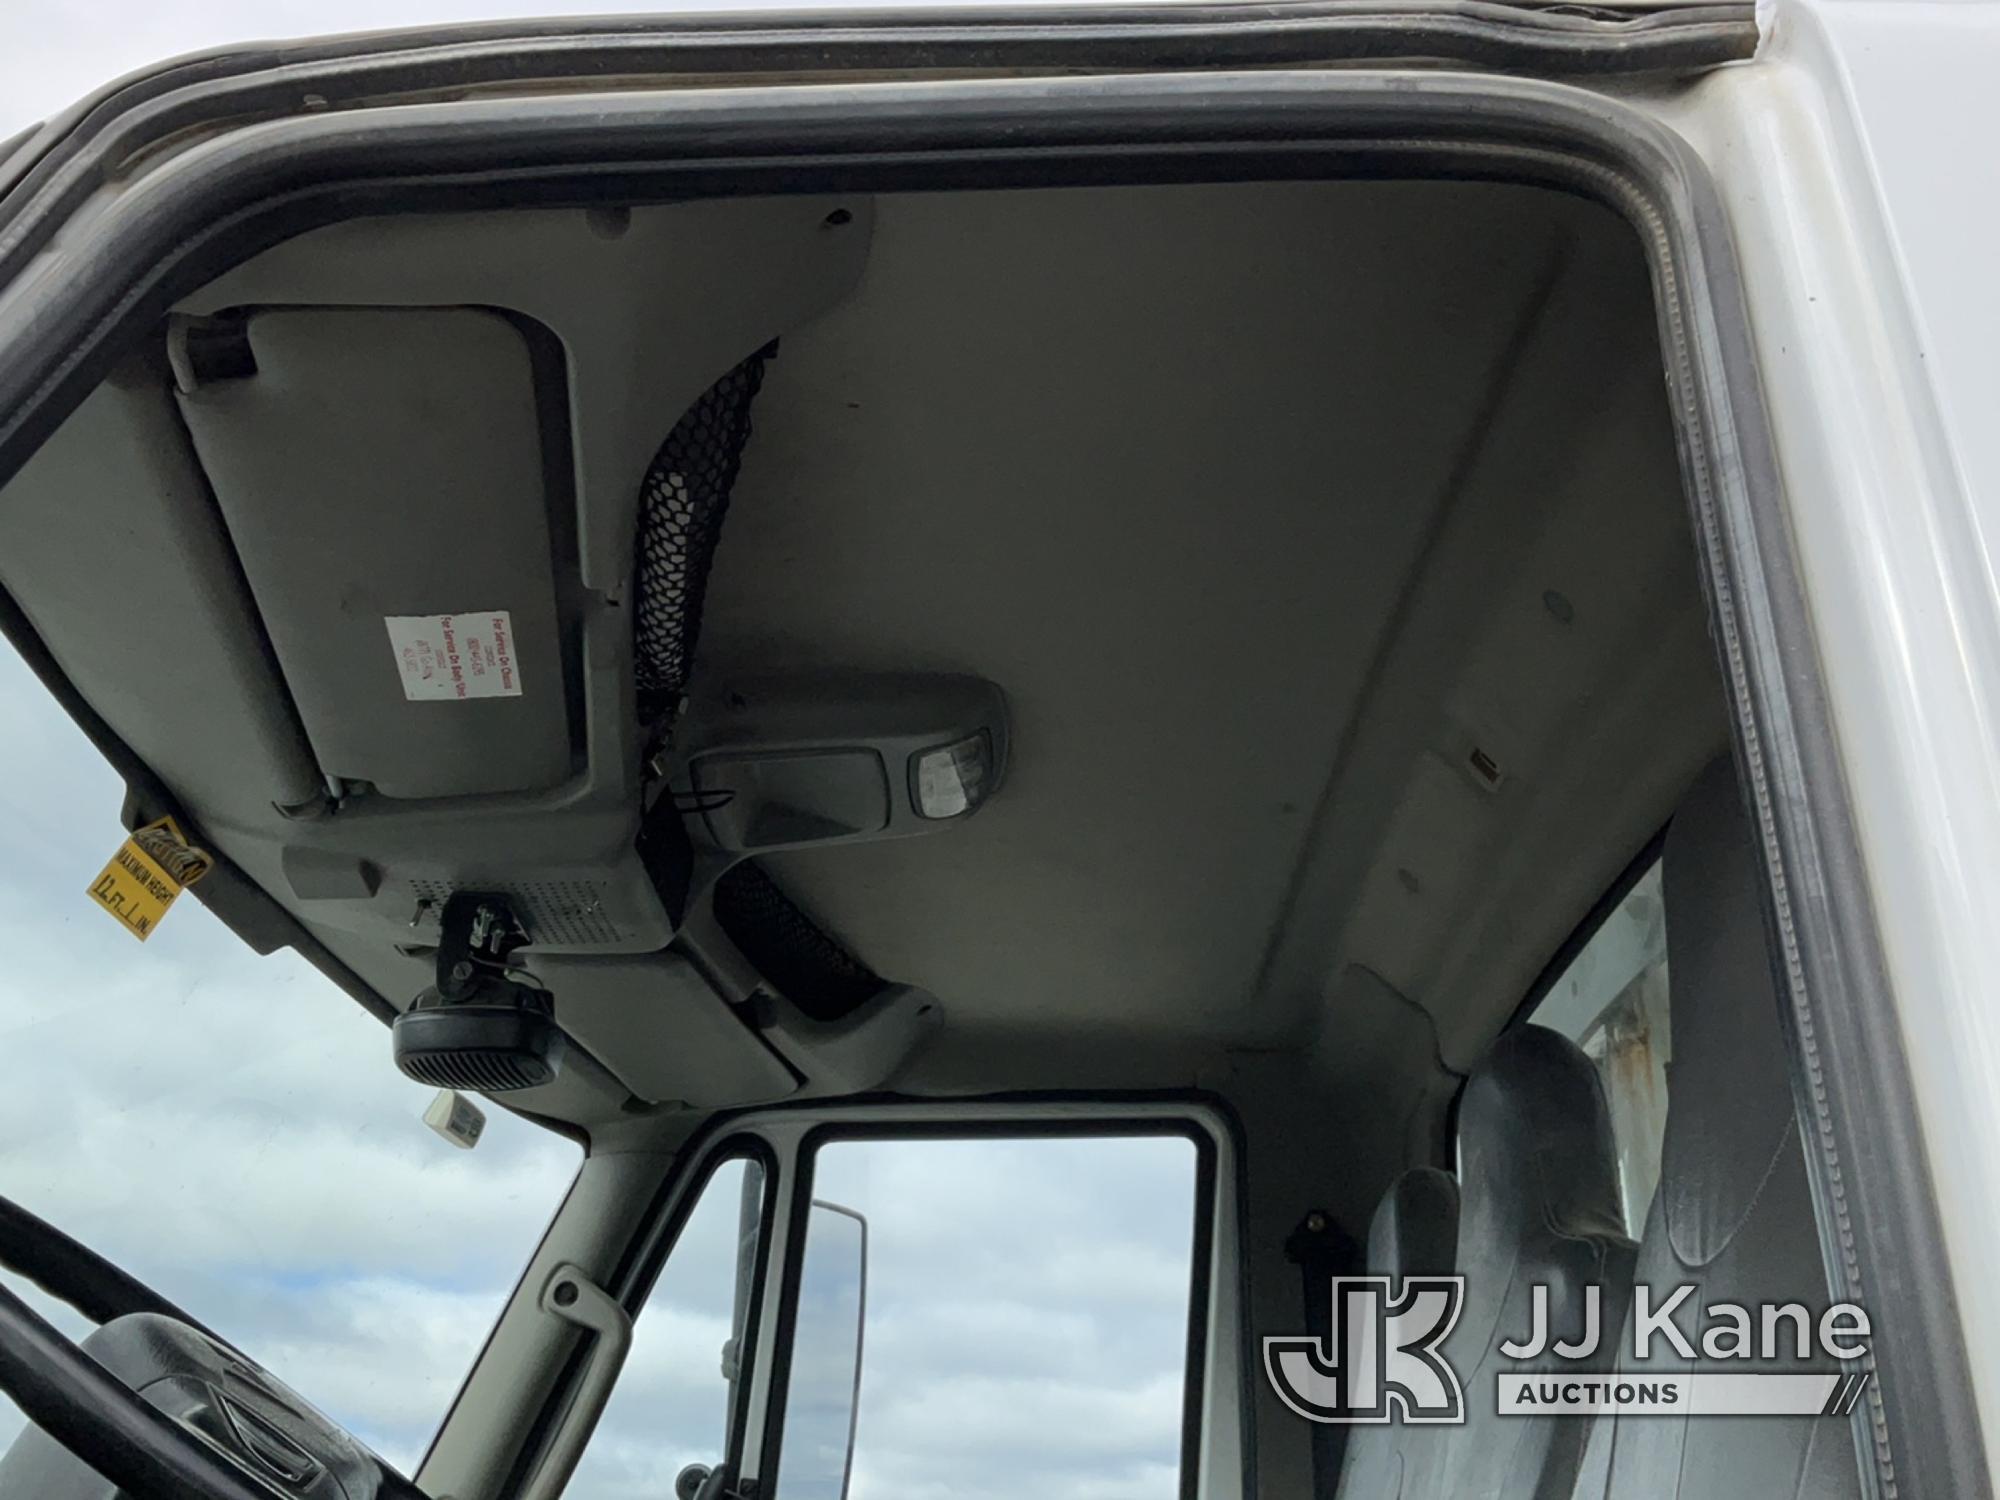 (Hawk Point, MO) Altec AA755-P, Bucket Truck rear mounted on 2013 International Durastar 4300 Utilit